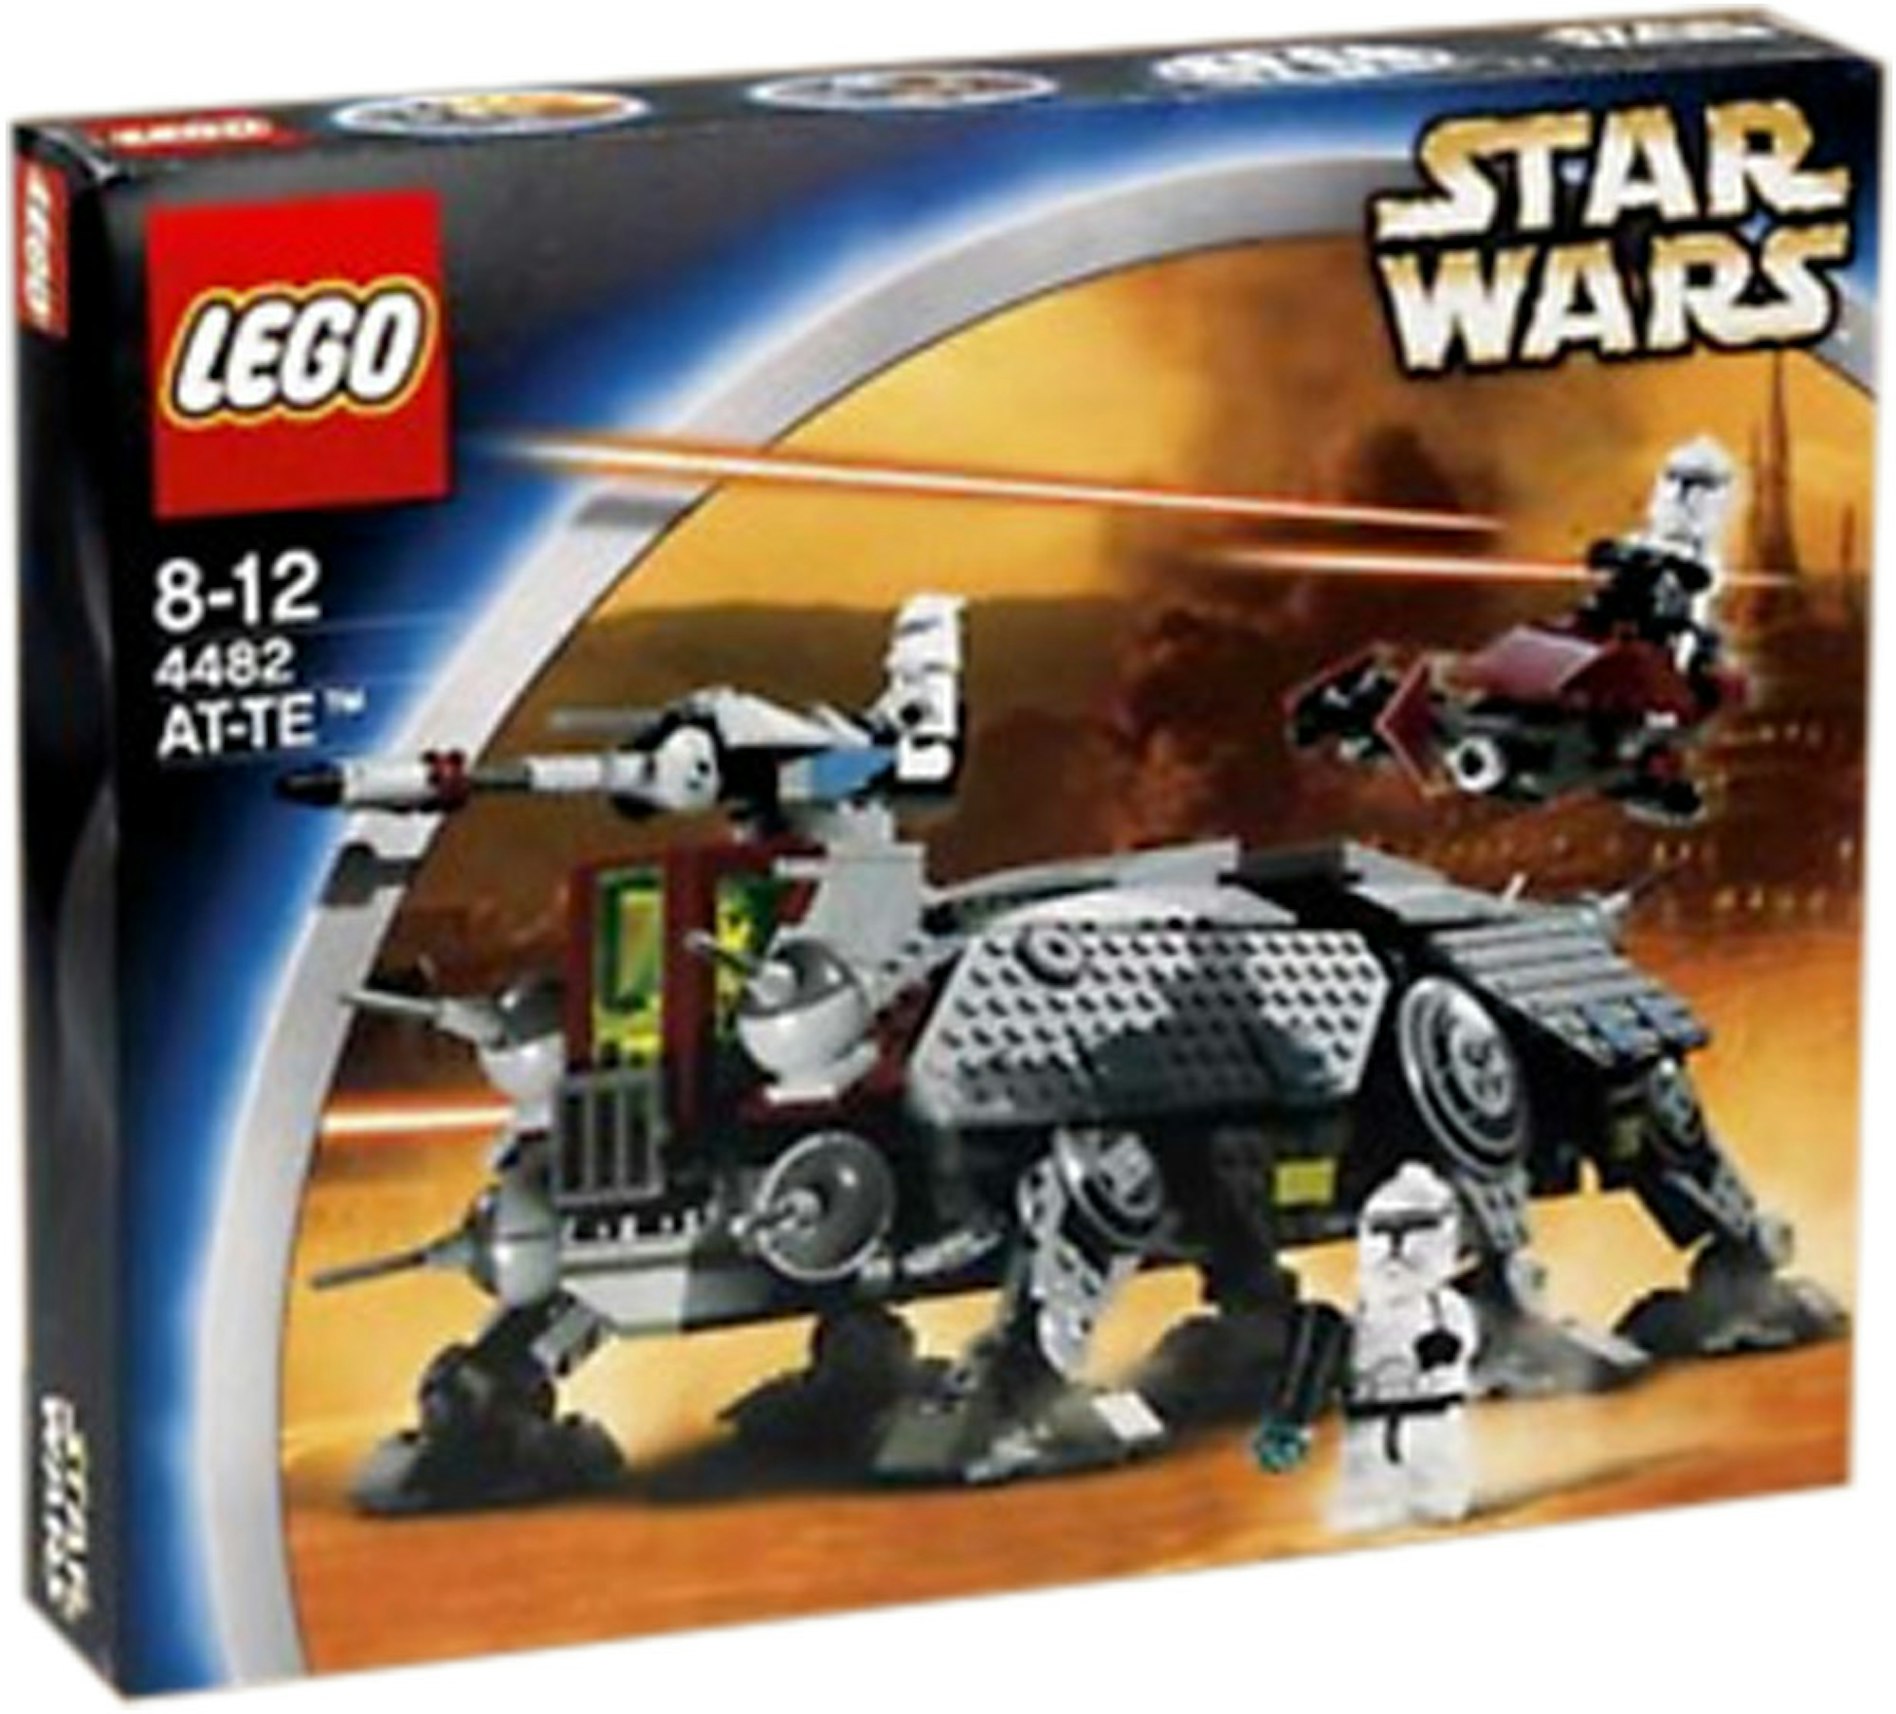 LEGO Wars AT-TE Set 4482 - US